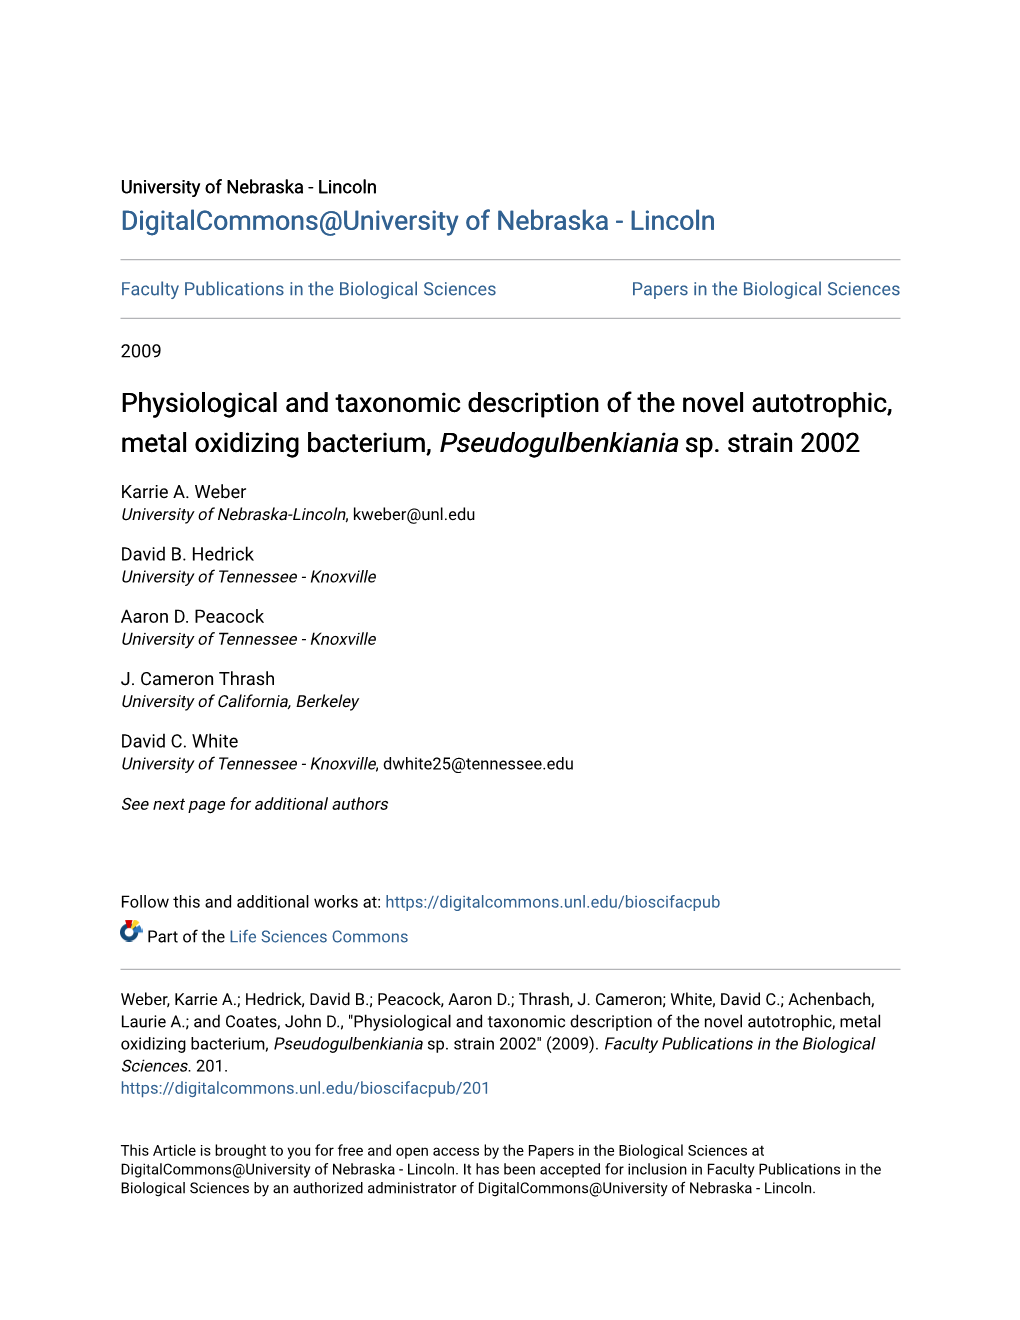 Physiological and Taxonomic Description of the Novel Autotrophic, Metal Oxidizing Bacterium, Pseudogulbenkiania Sp